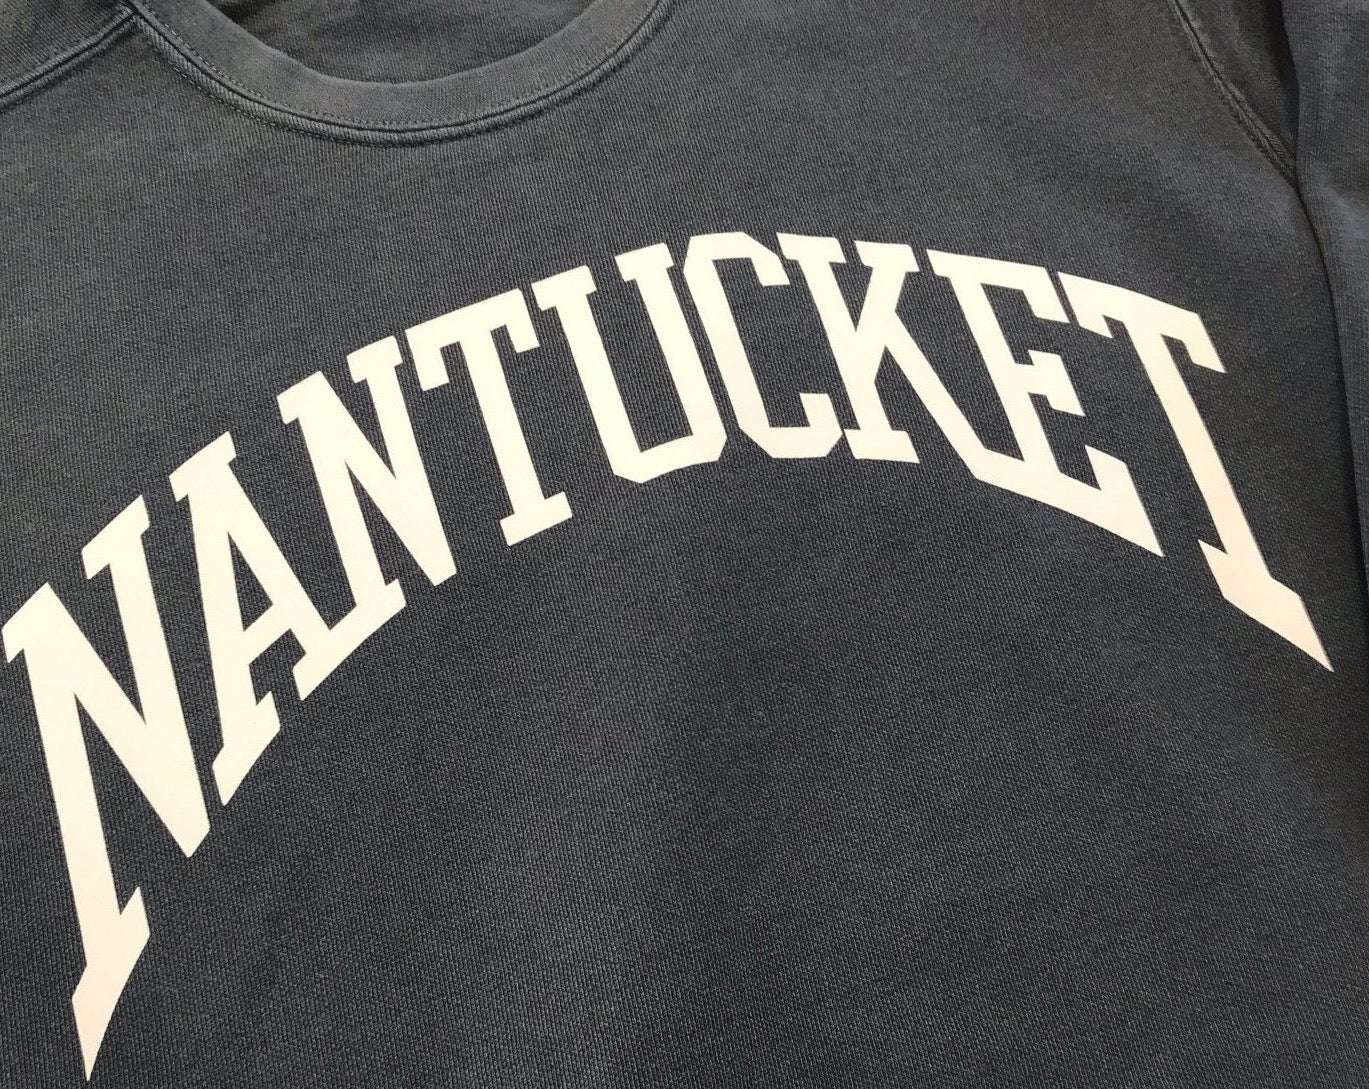 Nantucket Arch Crew Sweatshirt by Comfort Colors in Periwinkle Blue